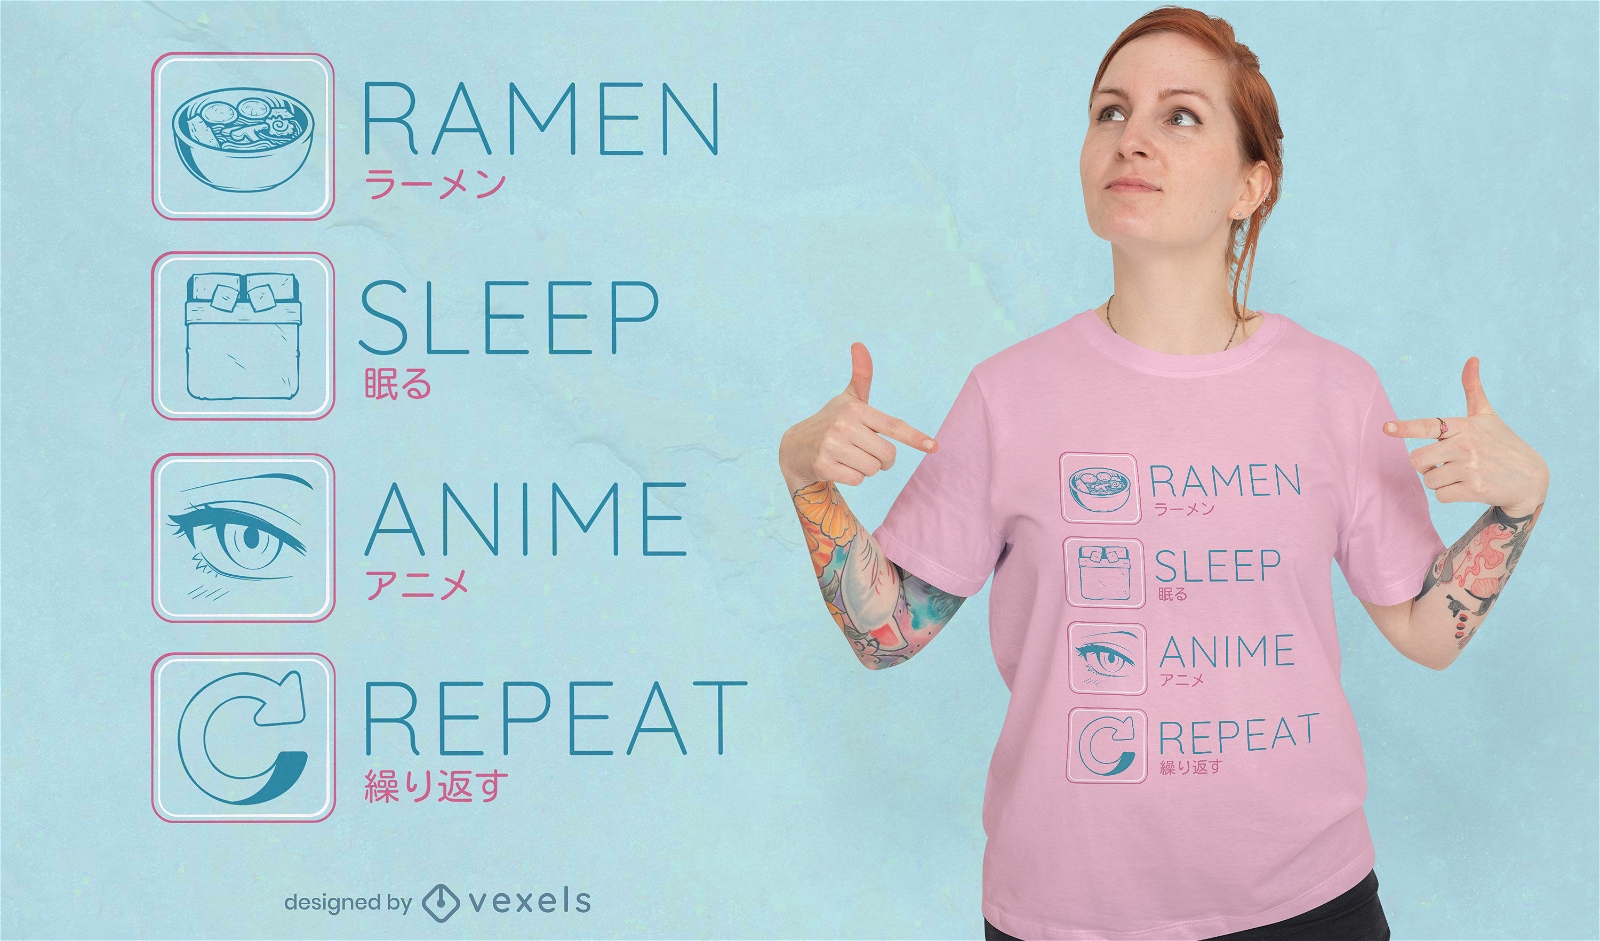 Ramen anime routine t-shirt design